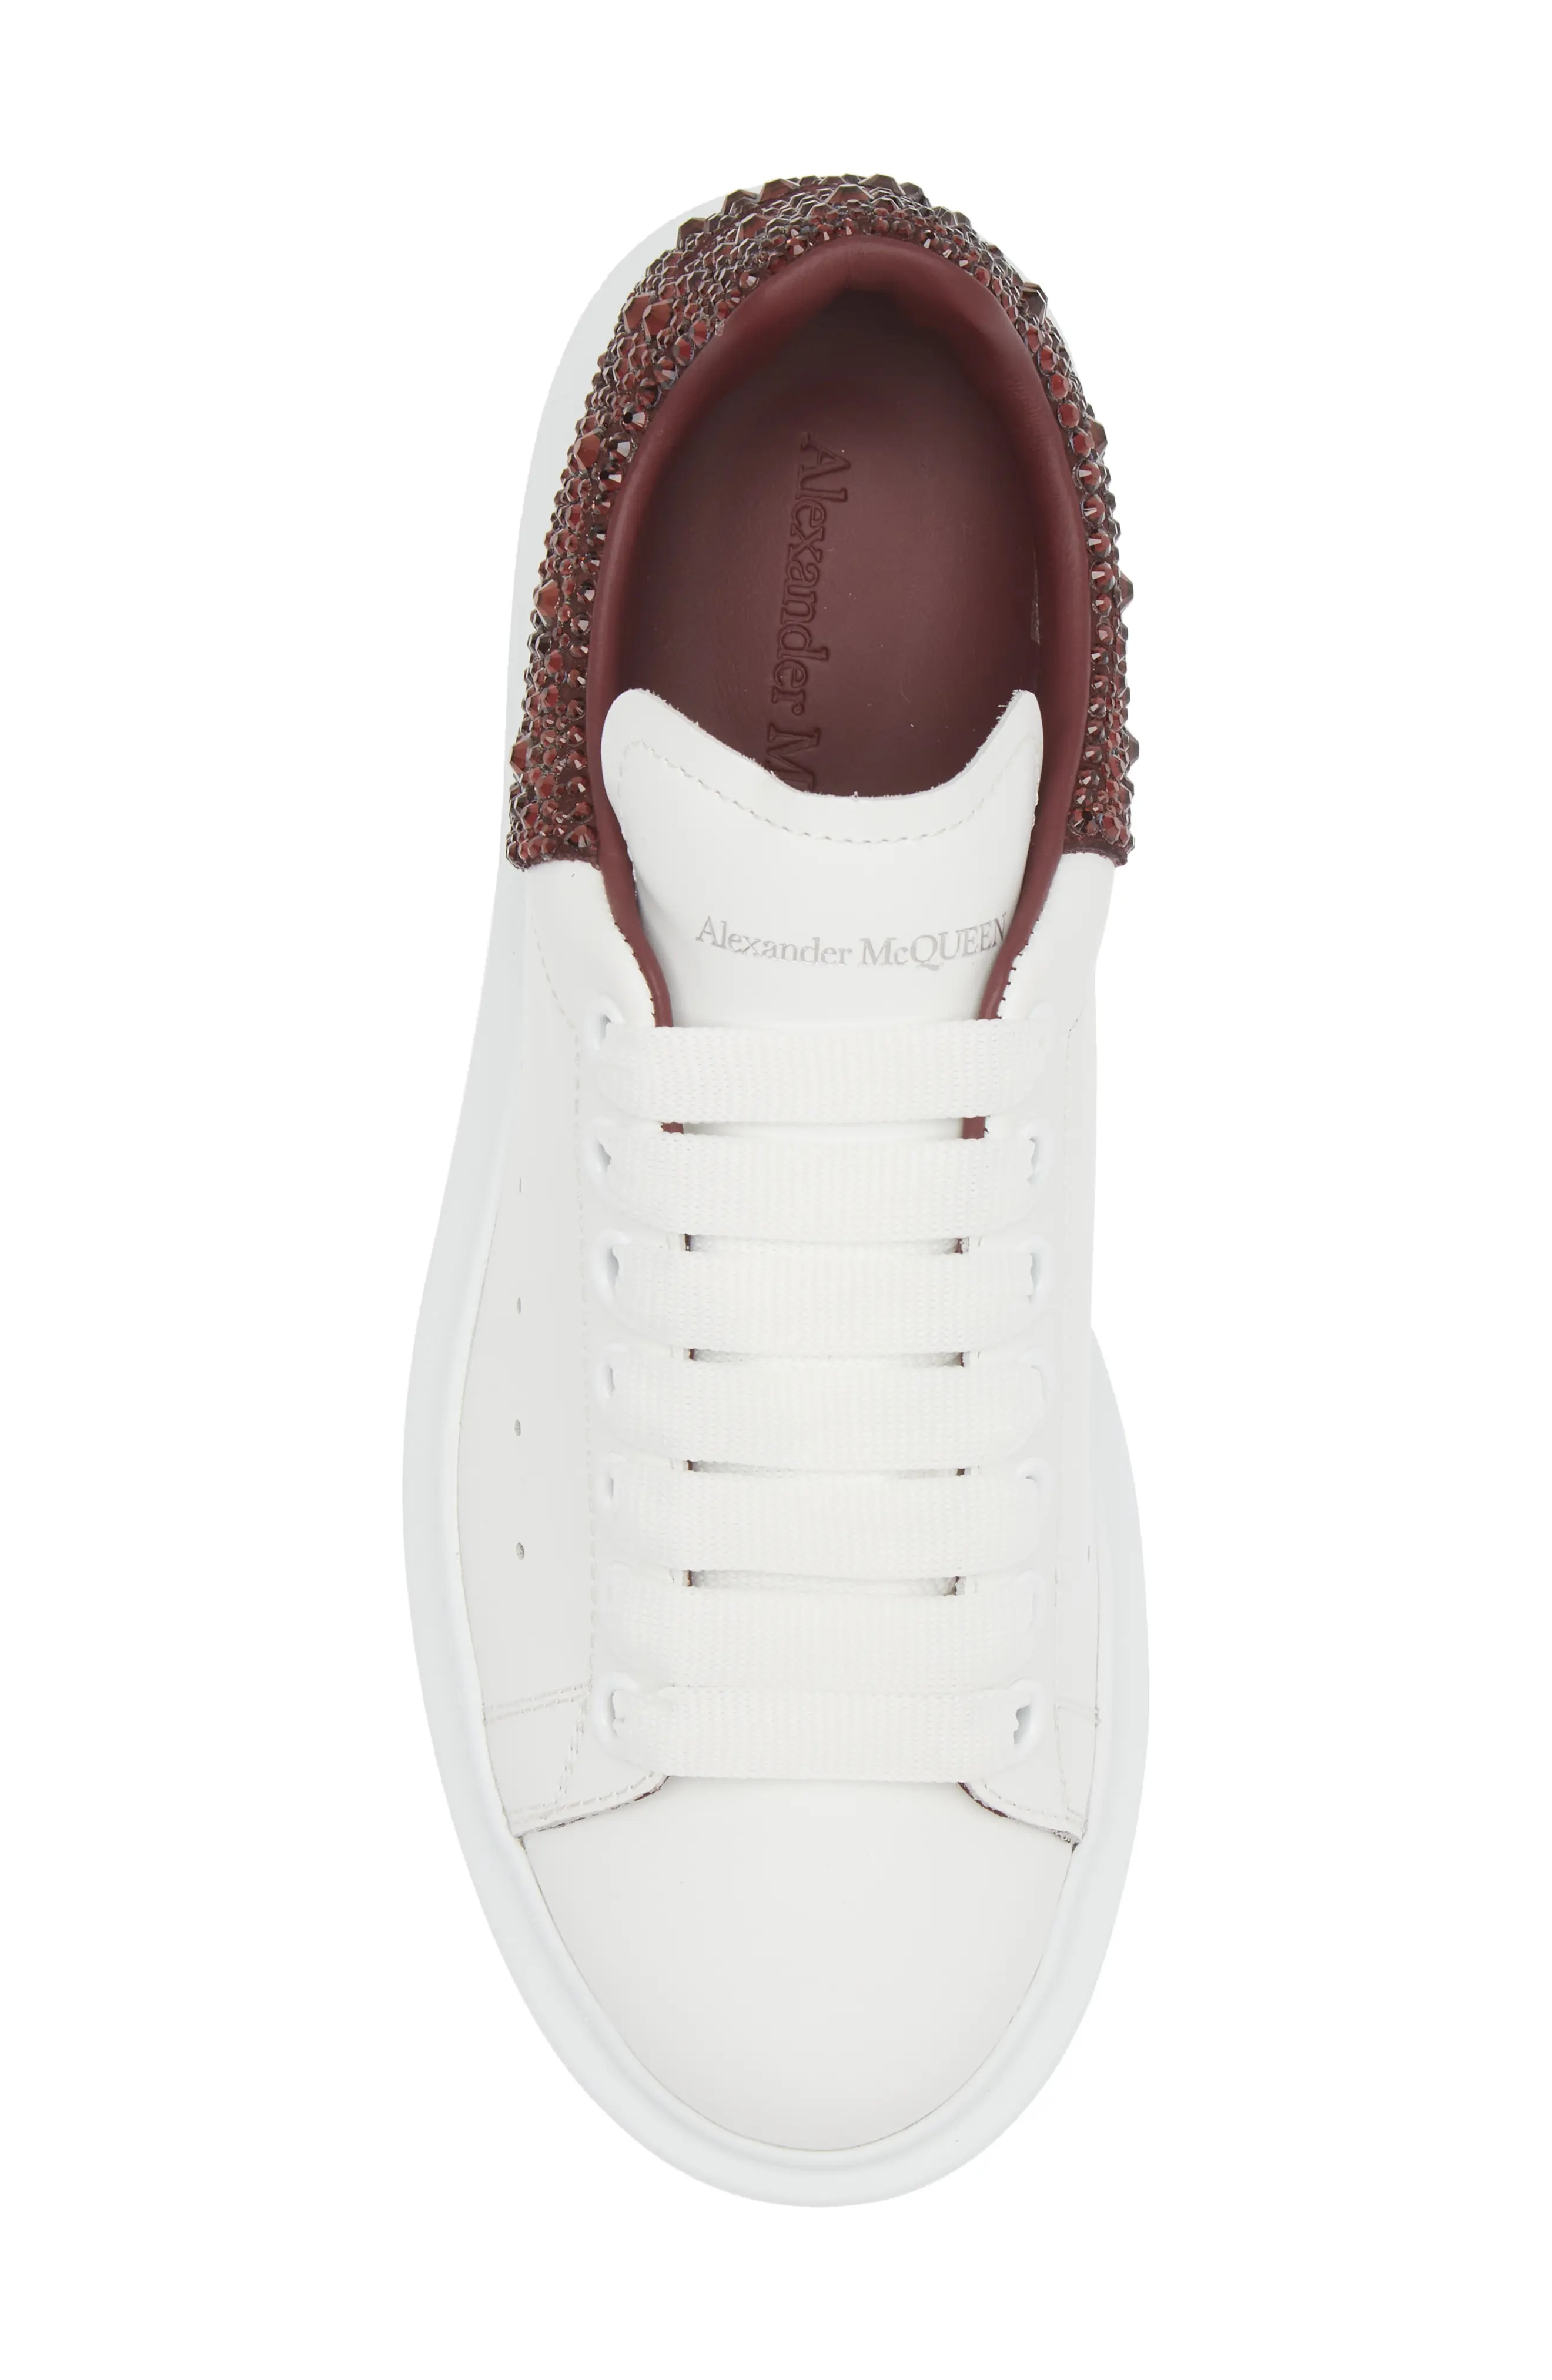 Oversized Crystal Embellished Sneaker in White/Burgundy - 5